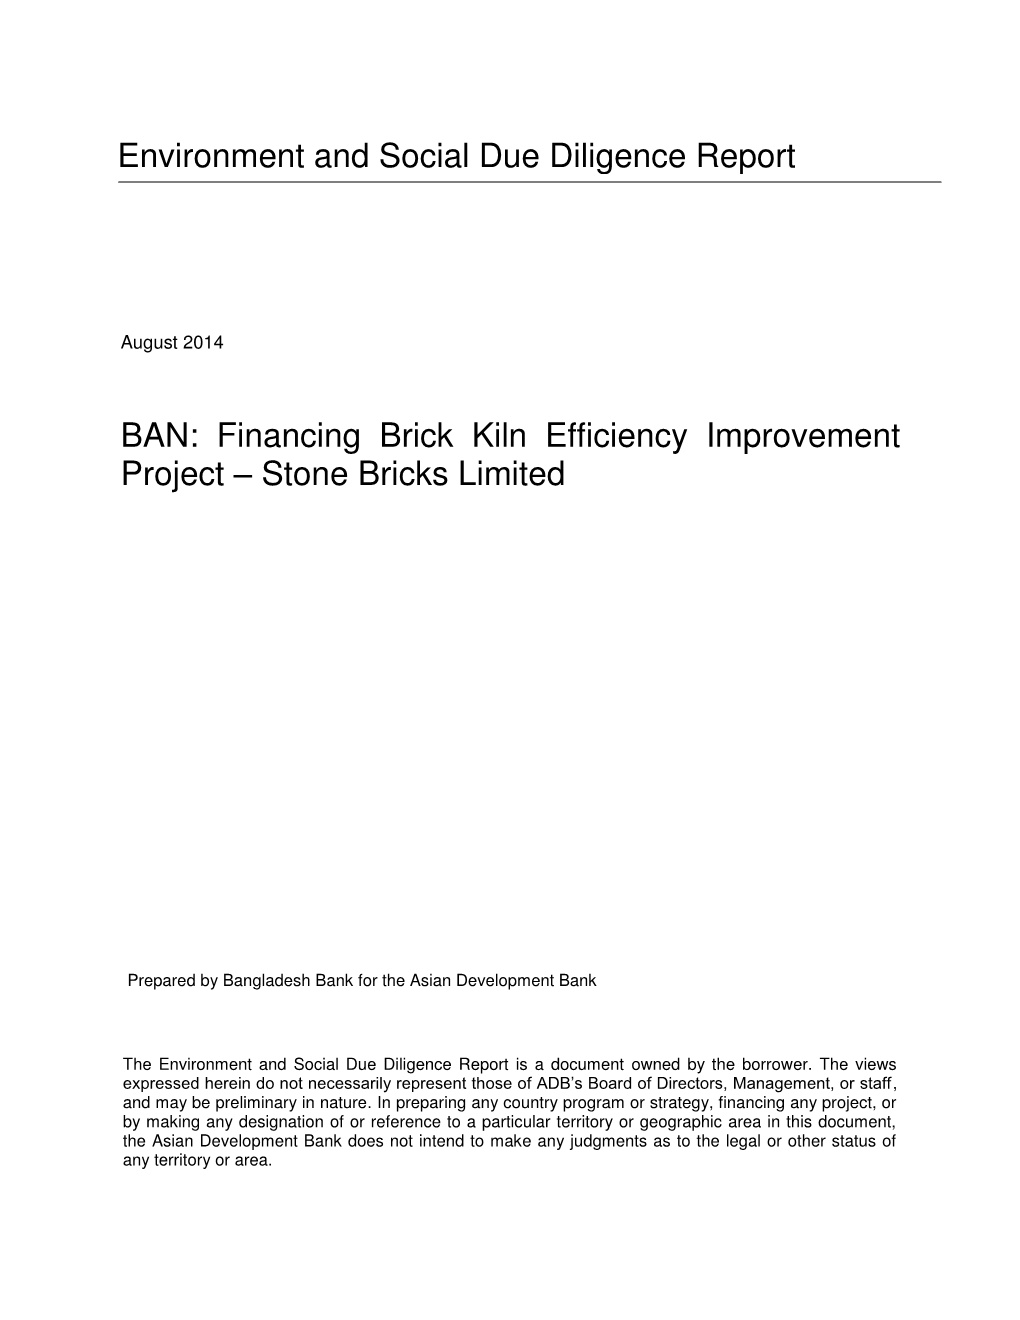 Financing Brick Kiln Efficiency Improvement Project – Stone Bricks Limited